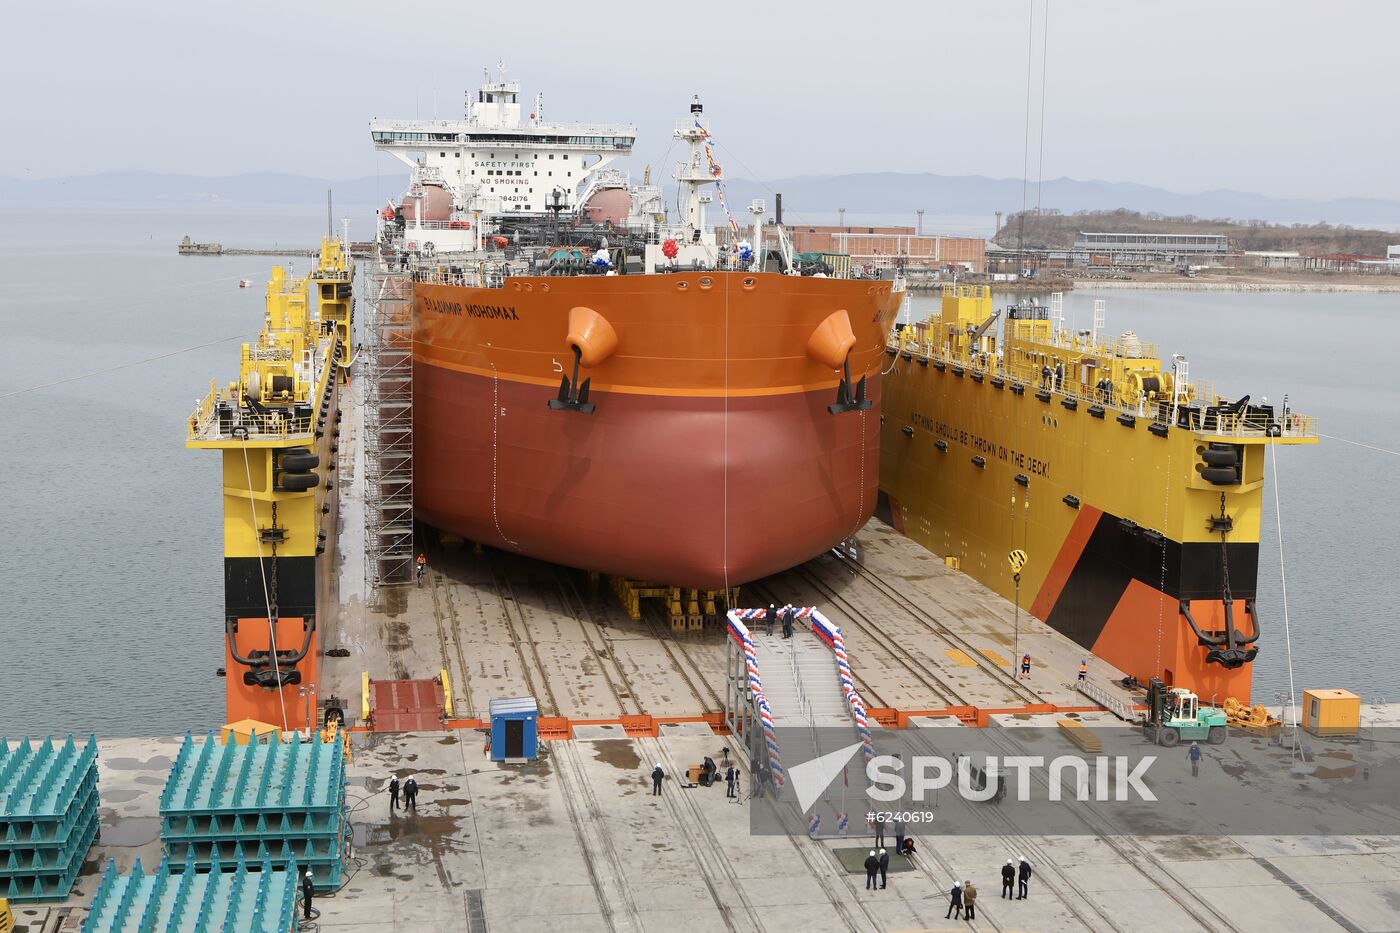 Russia Vladimir Monomakh Tanker Launch